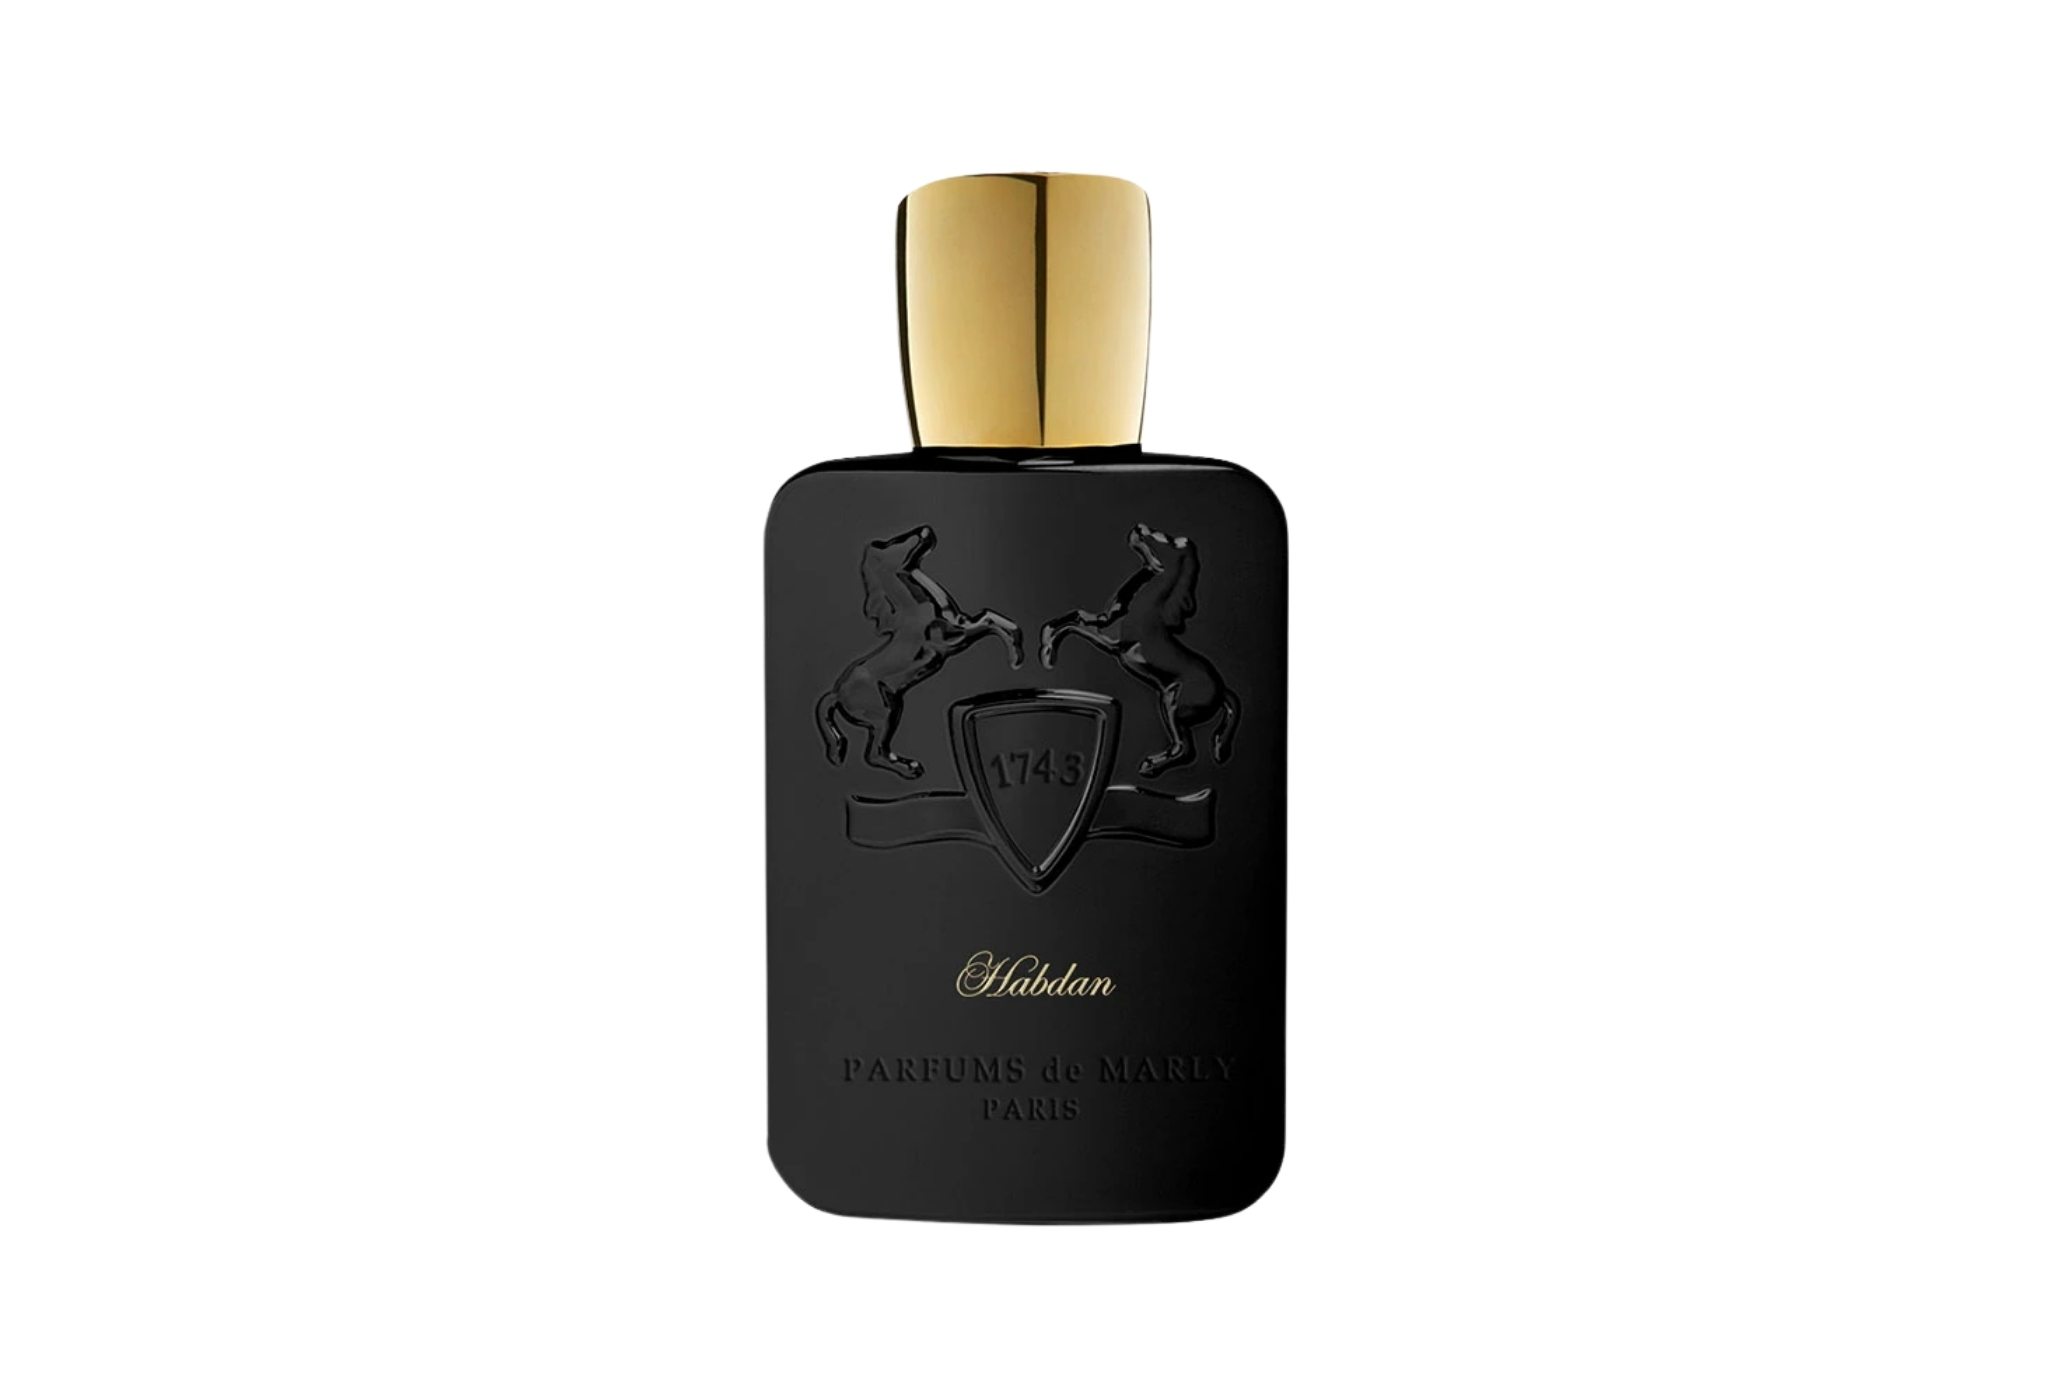 Habdan Parfums de Marly